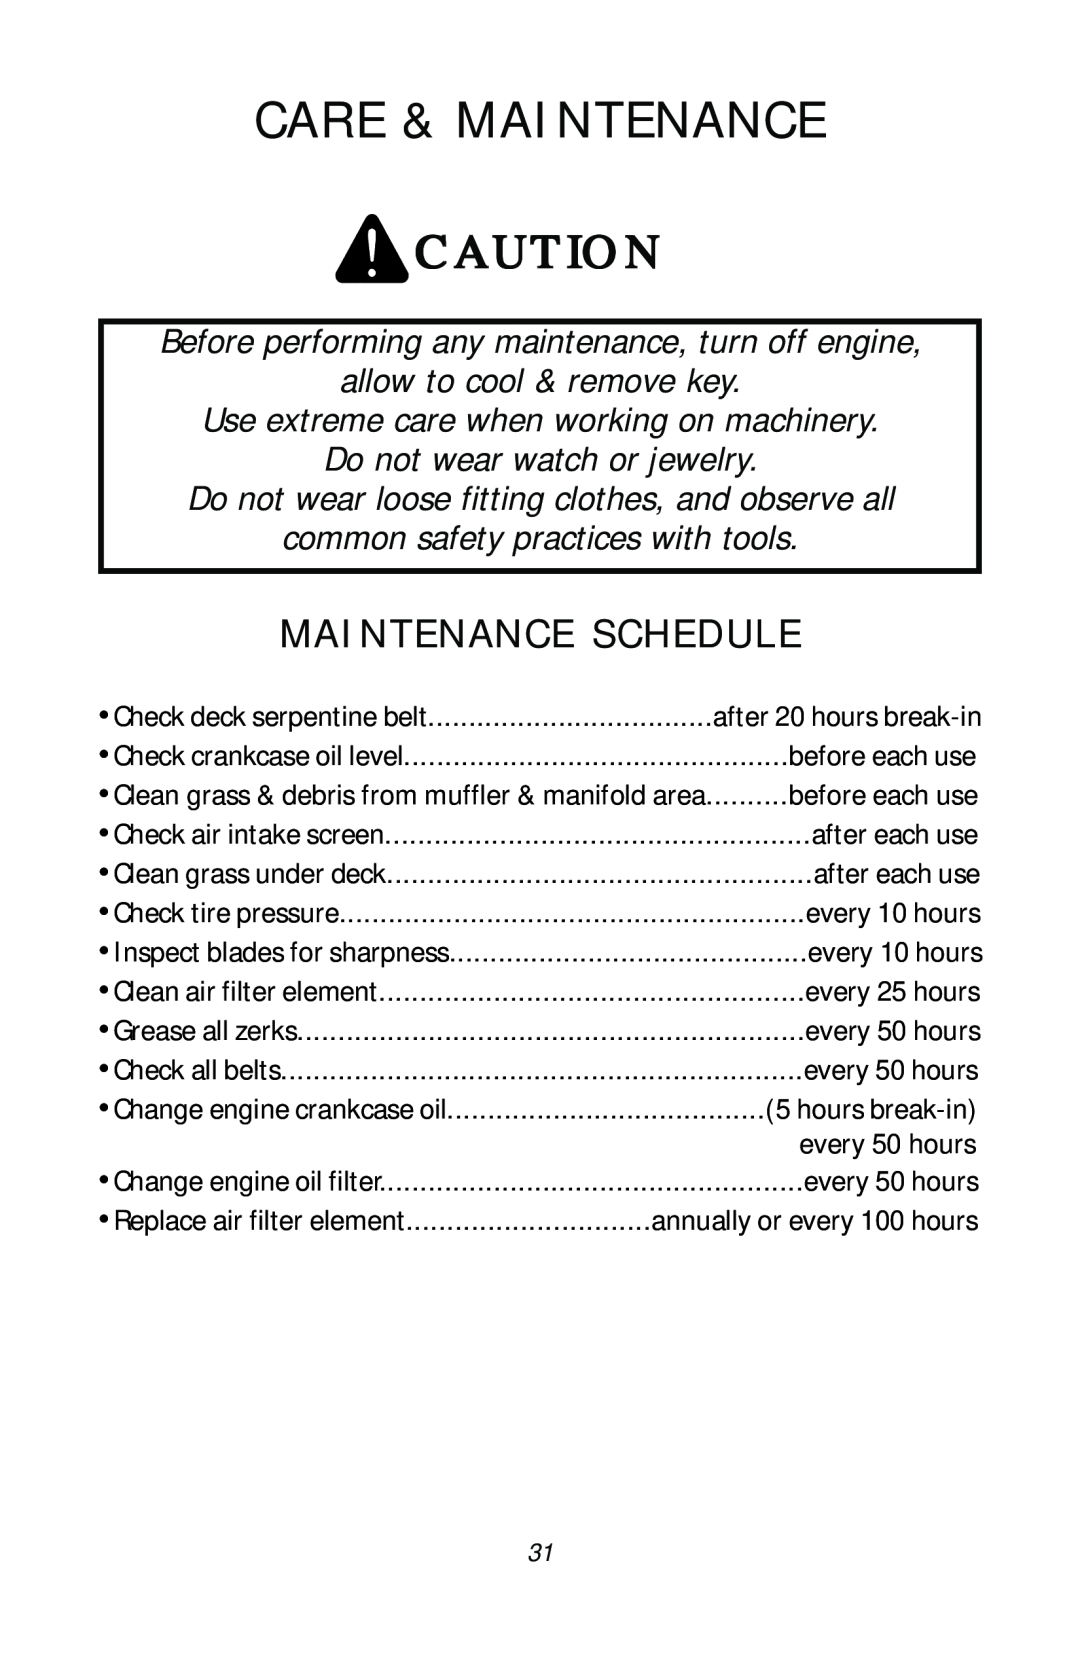 Dixon 17411-1103, ZTR RAM 50 manual Care & Maintenance, Maintenance Schedule 